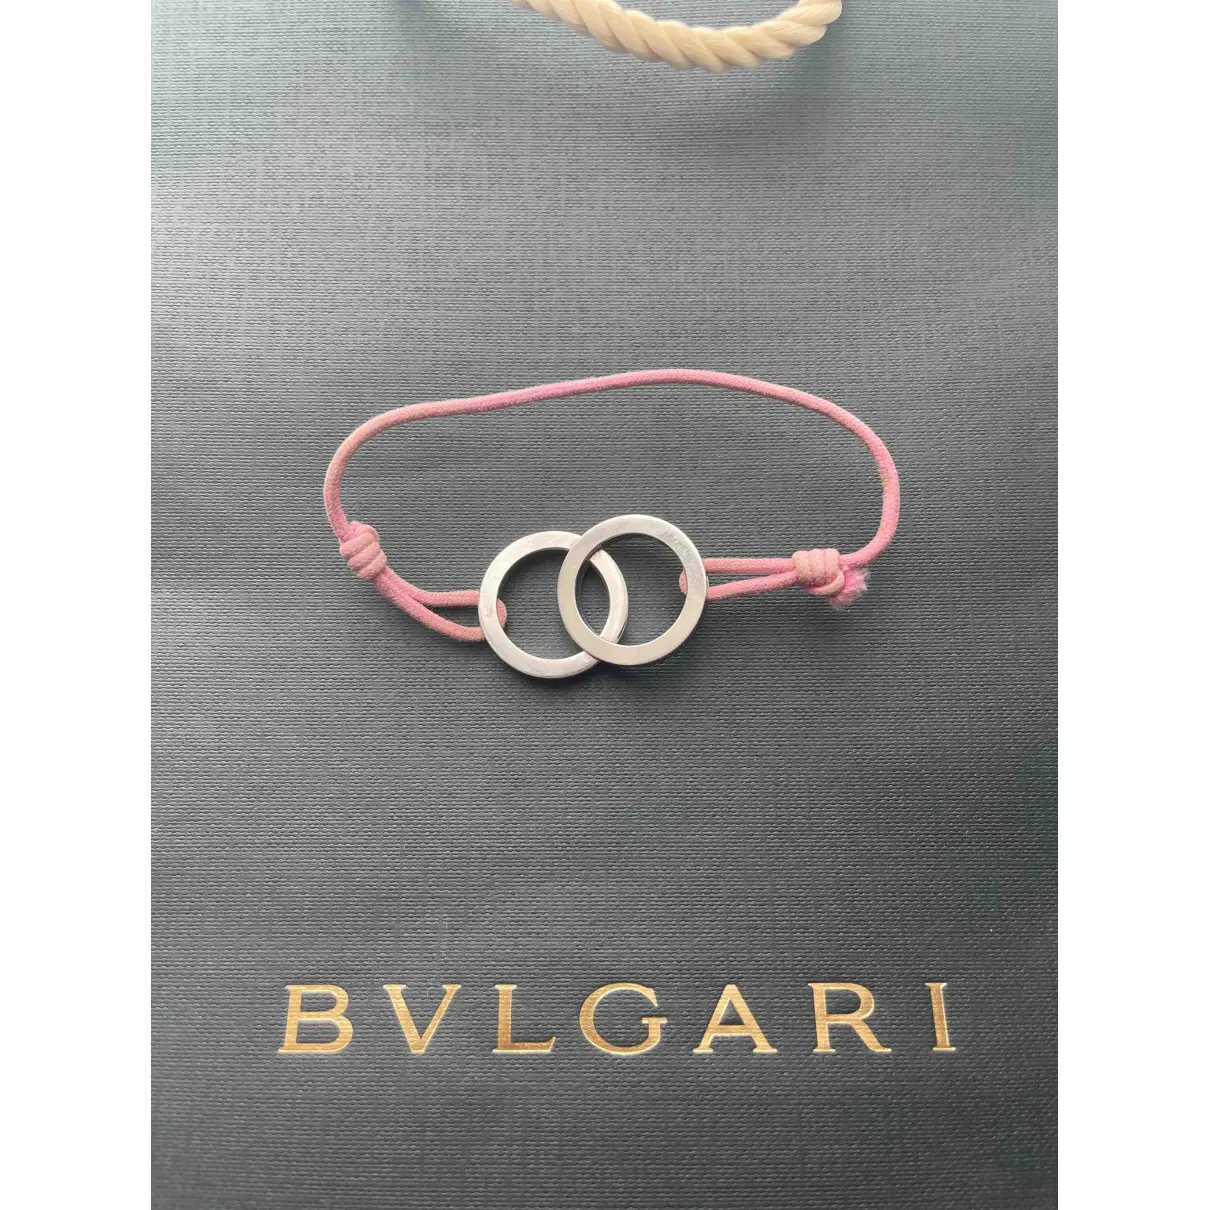 Buy Bvlgari Bulgari silver bracelet online